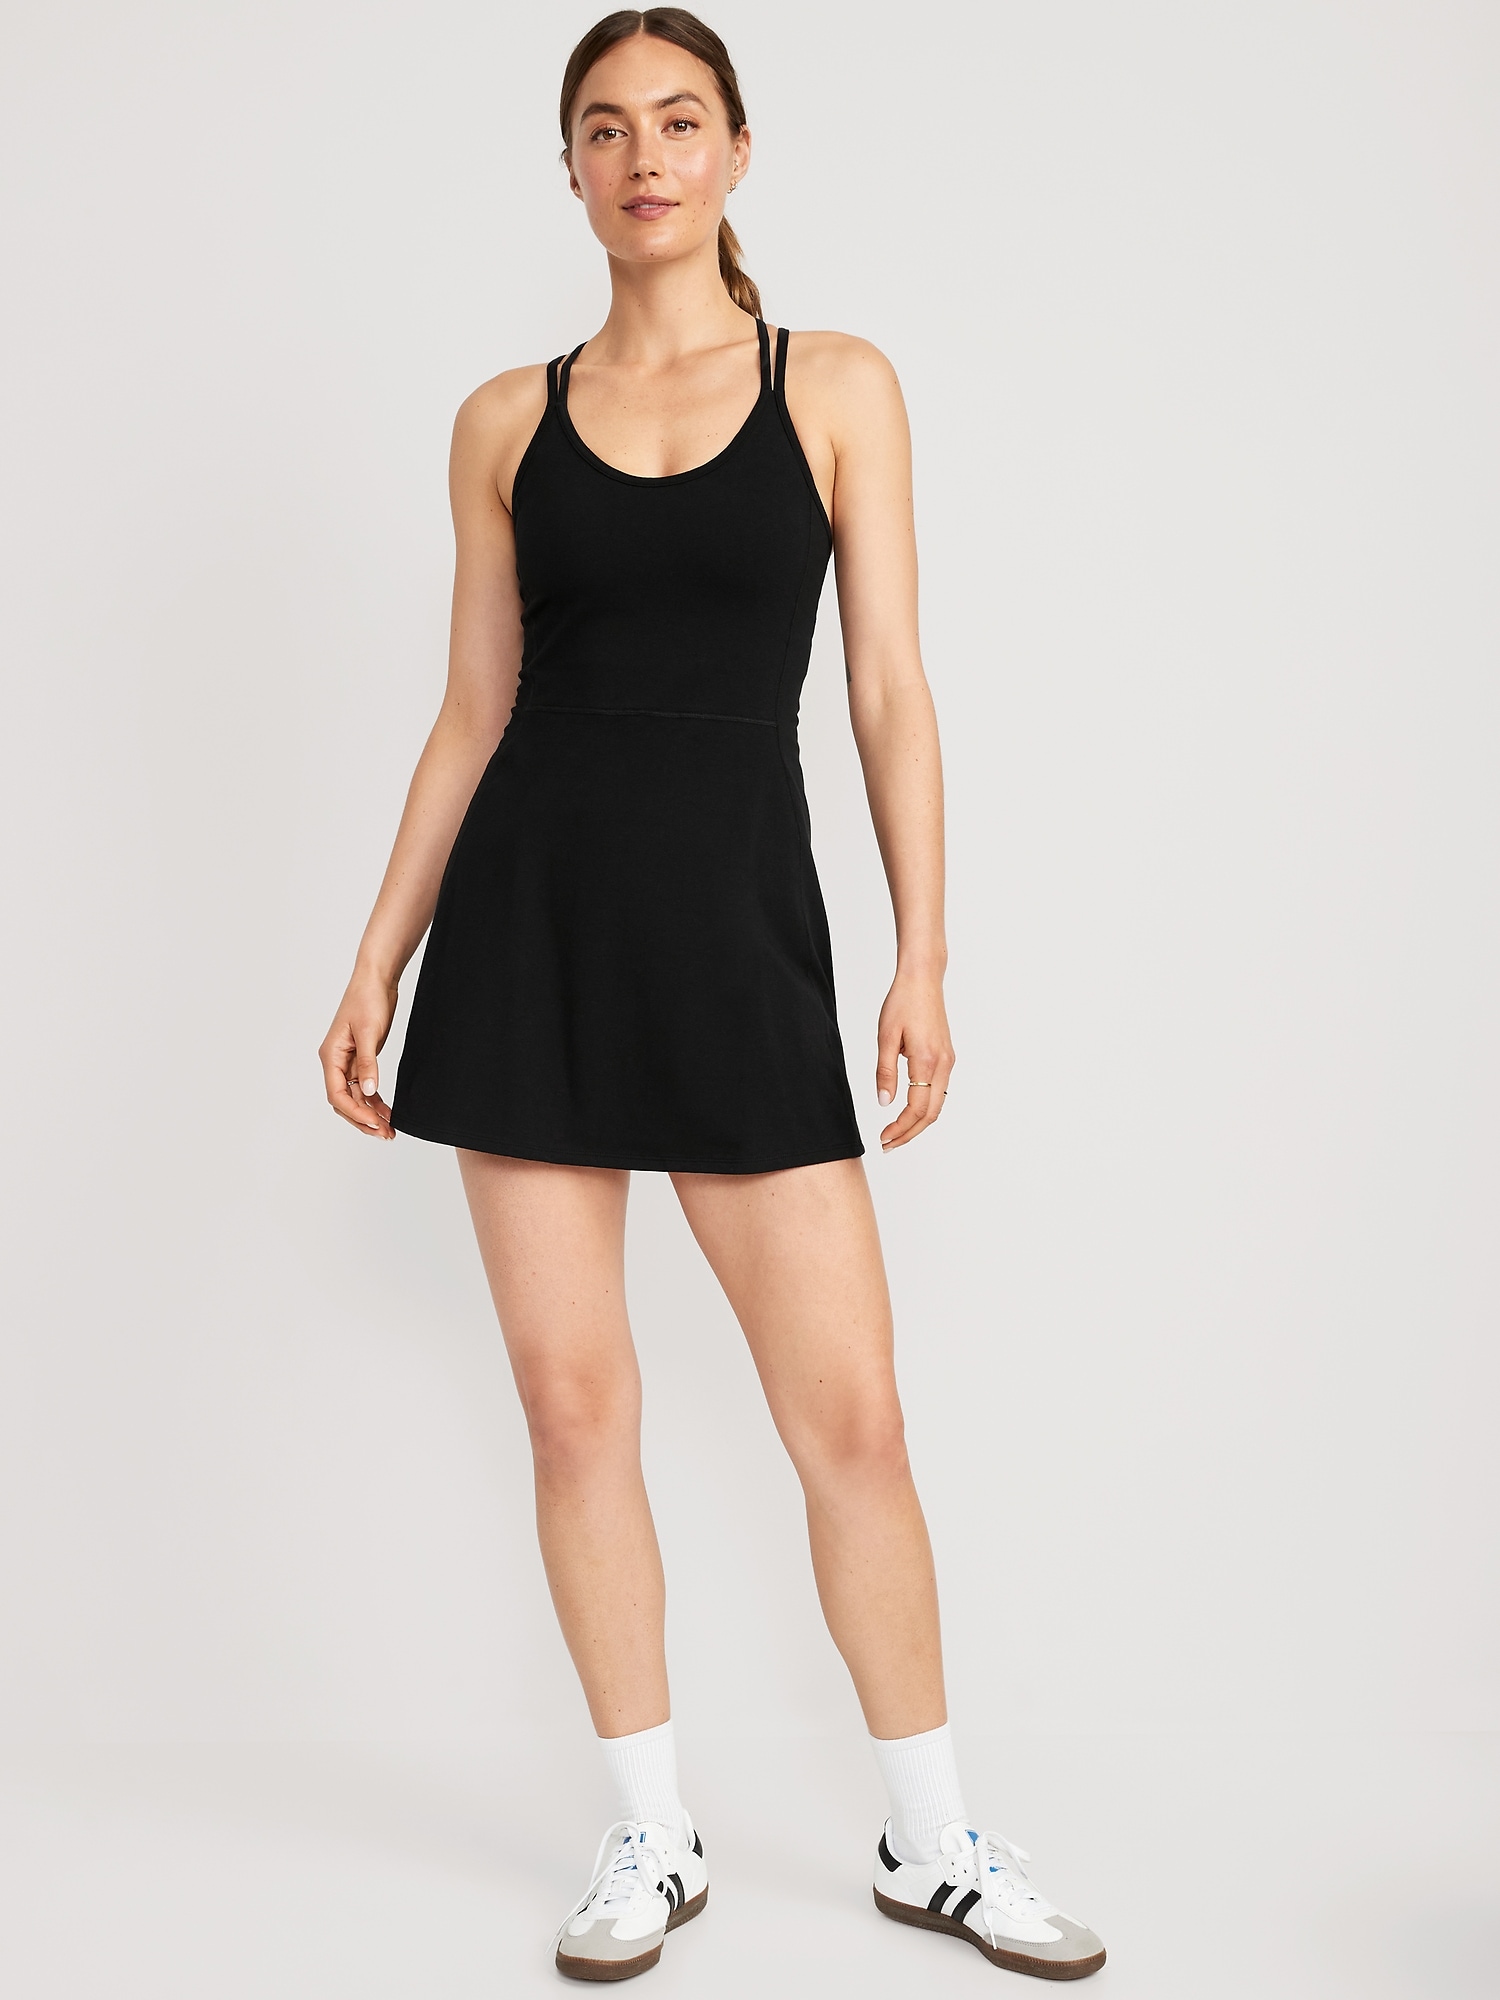 Old Navy Women’s PowerSoft Sleeveless Shelf-Bra Support Dress Size 2X 3X $55